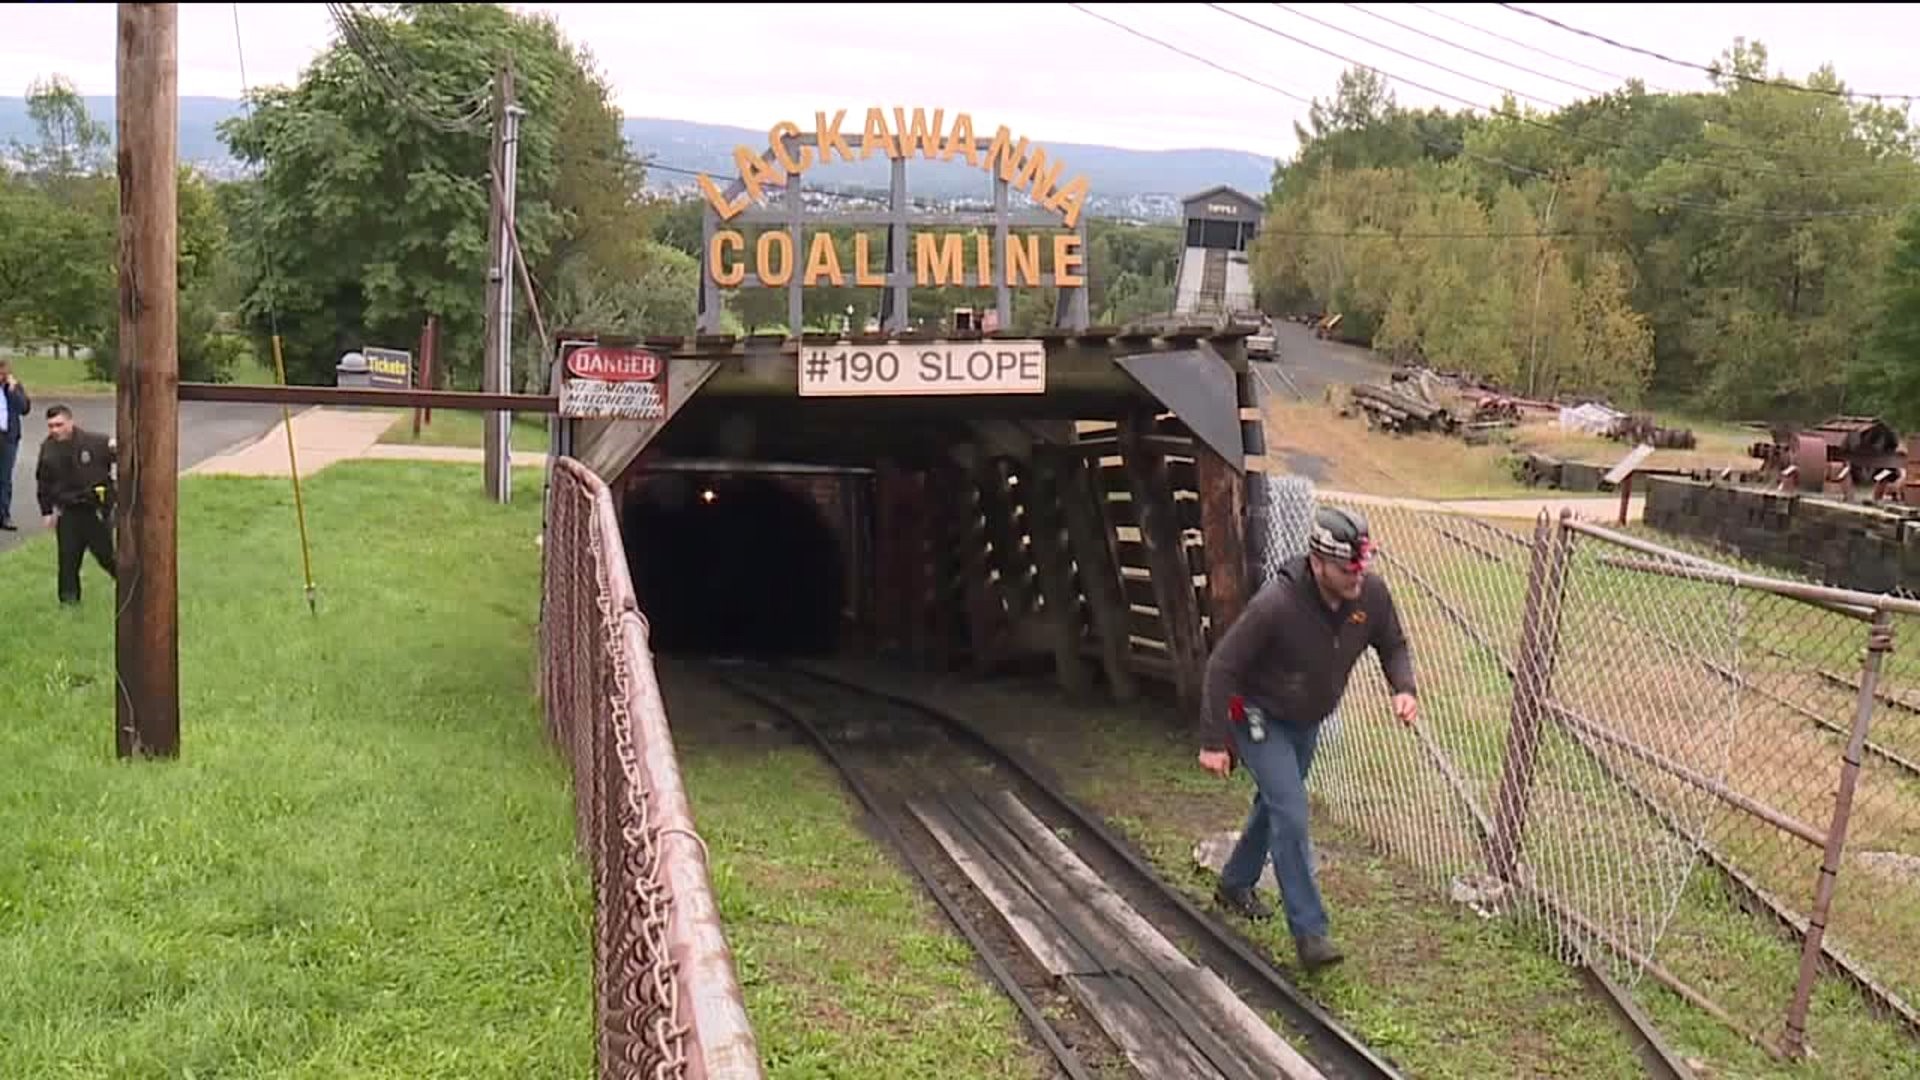 wilkes barre coal mine tour